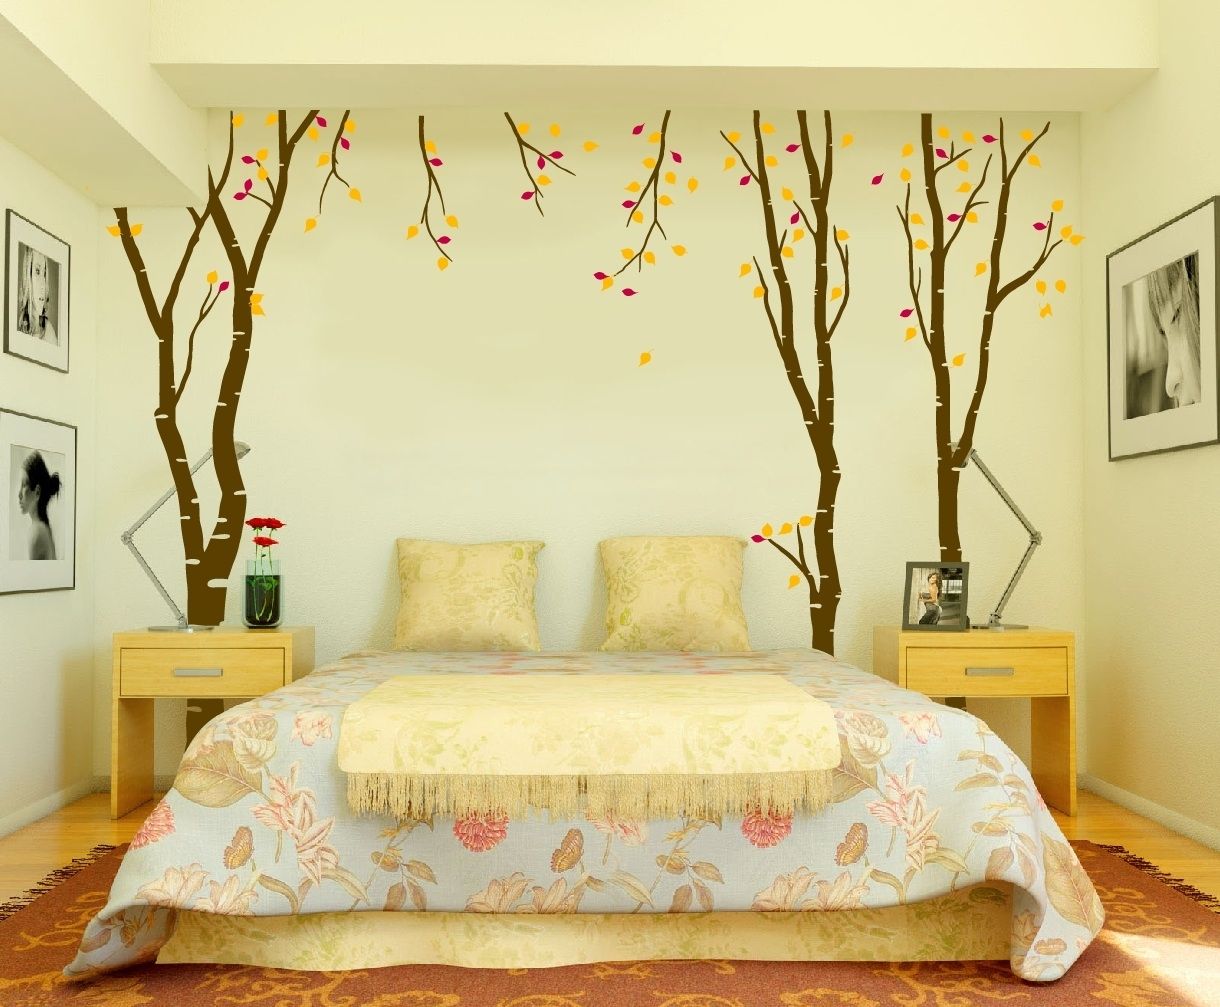 Bedroom Room Wall Art Ideas Large Decorative Wall Hangings Wall With Regard To Bedroom Wall Art (Photo 15 of 20)